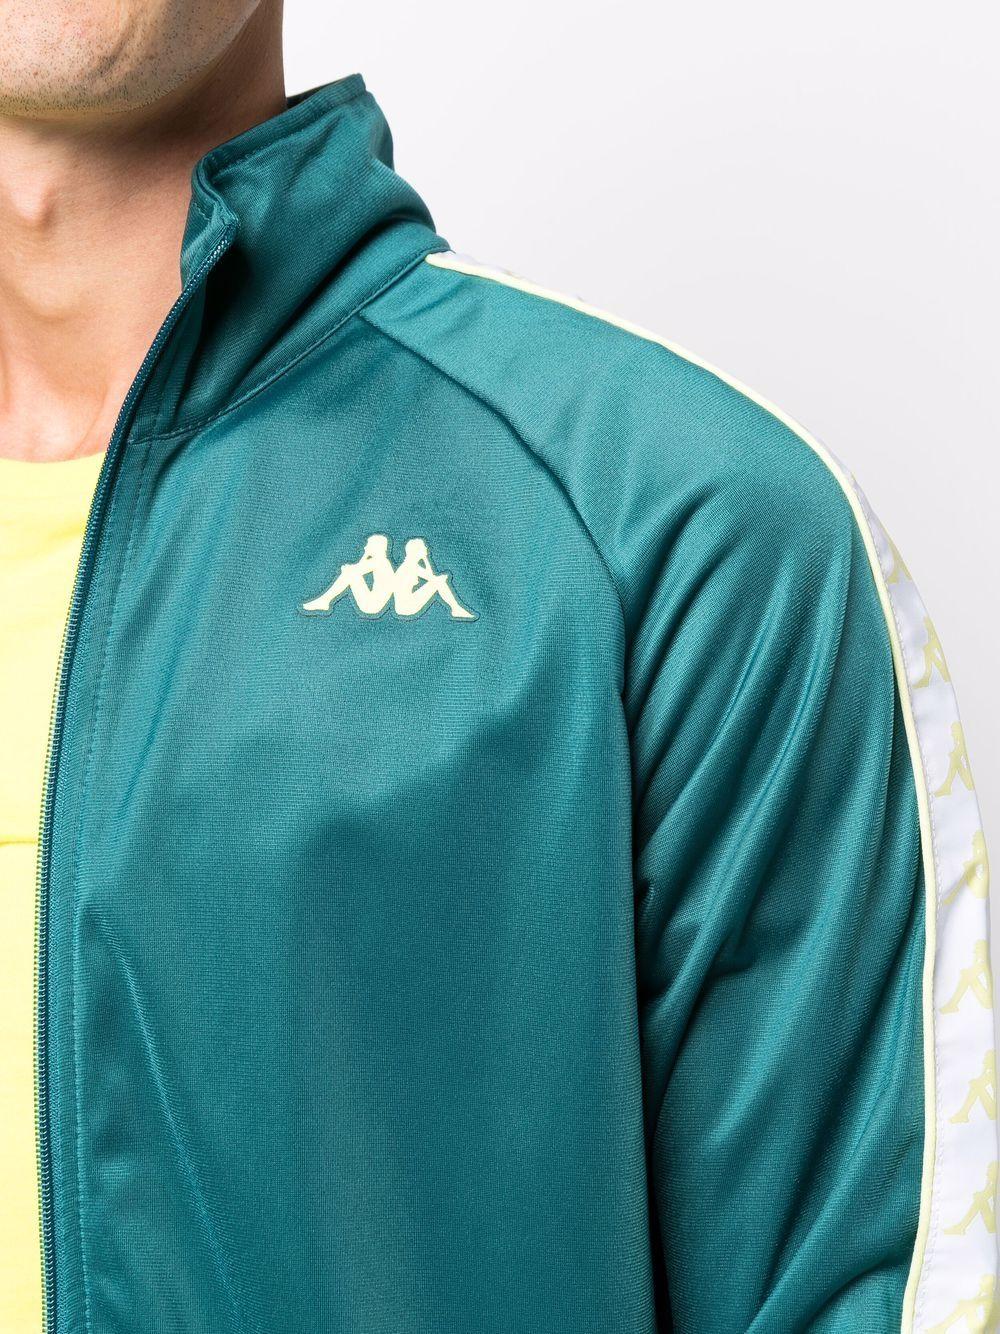 Kappa Logo-tape Zip-up Sweatshirt in Green for Men - Lyst